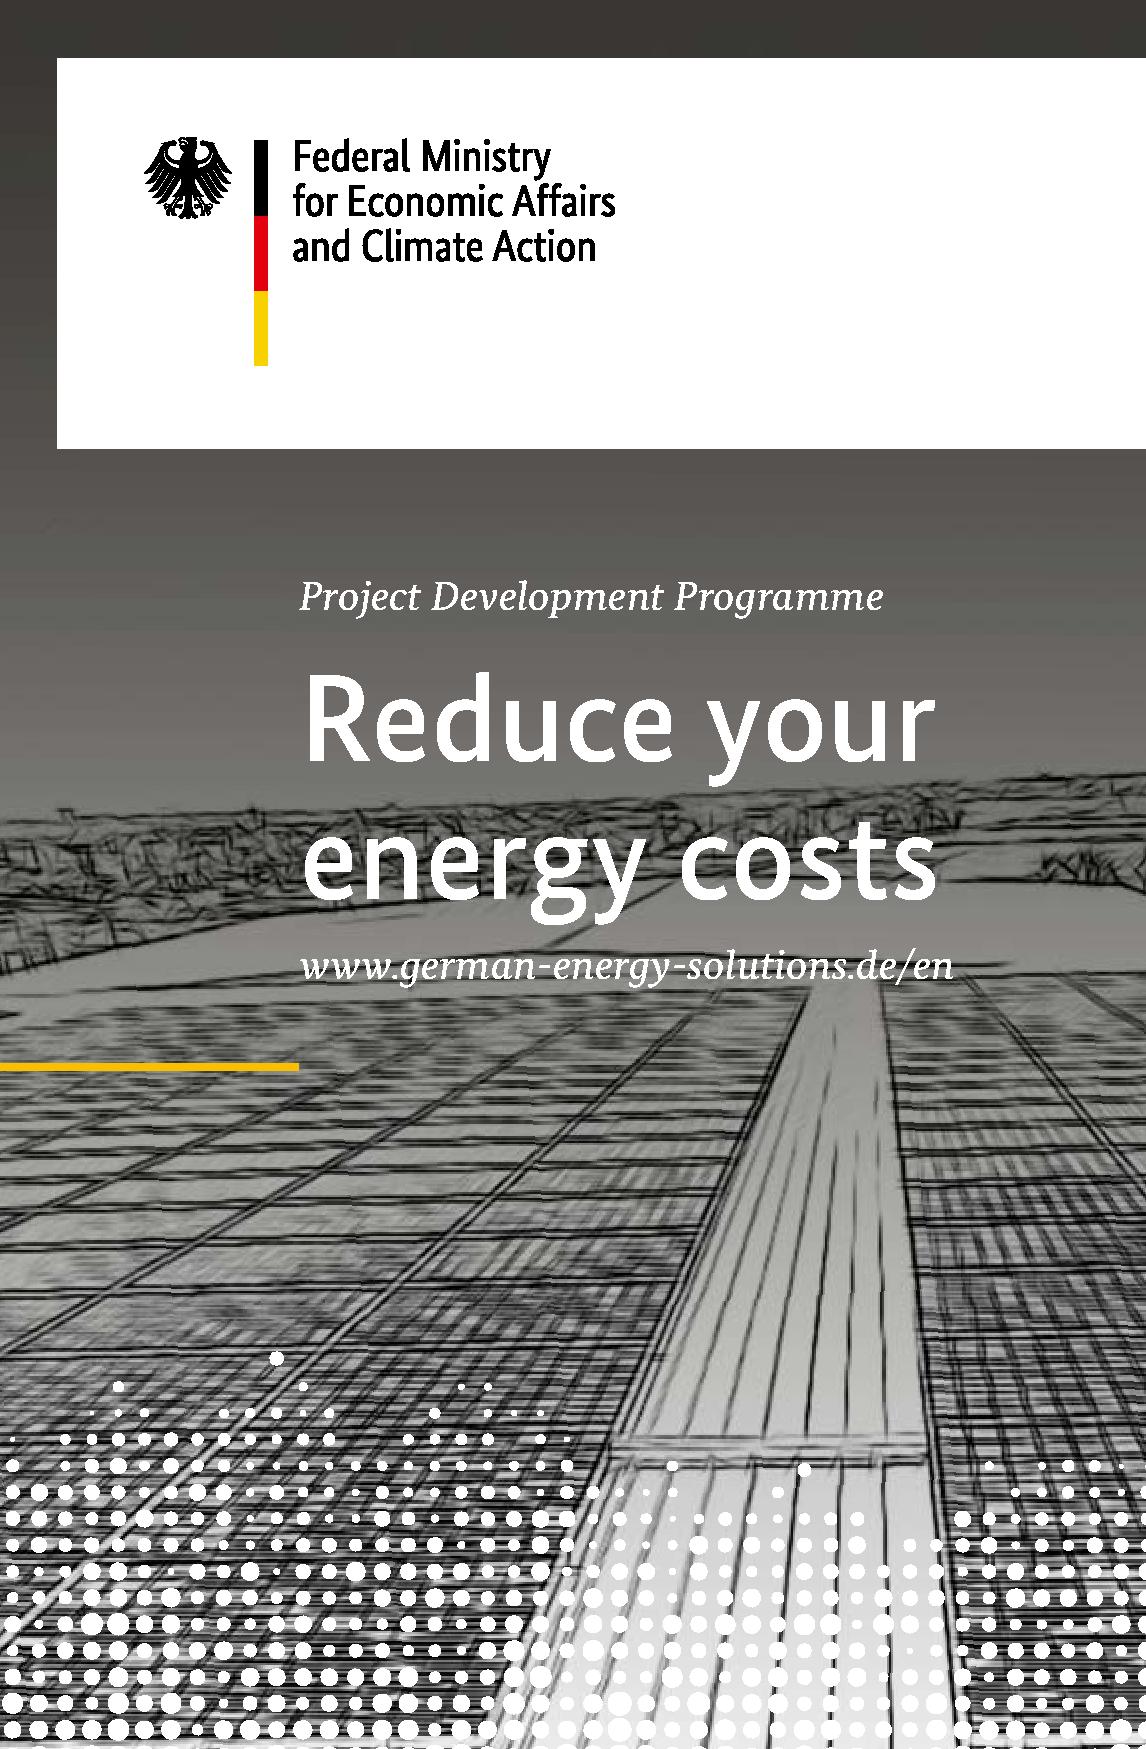 Project Development Programme